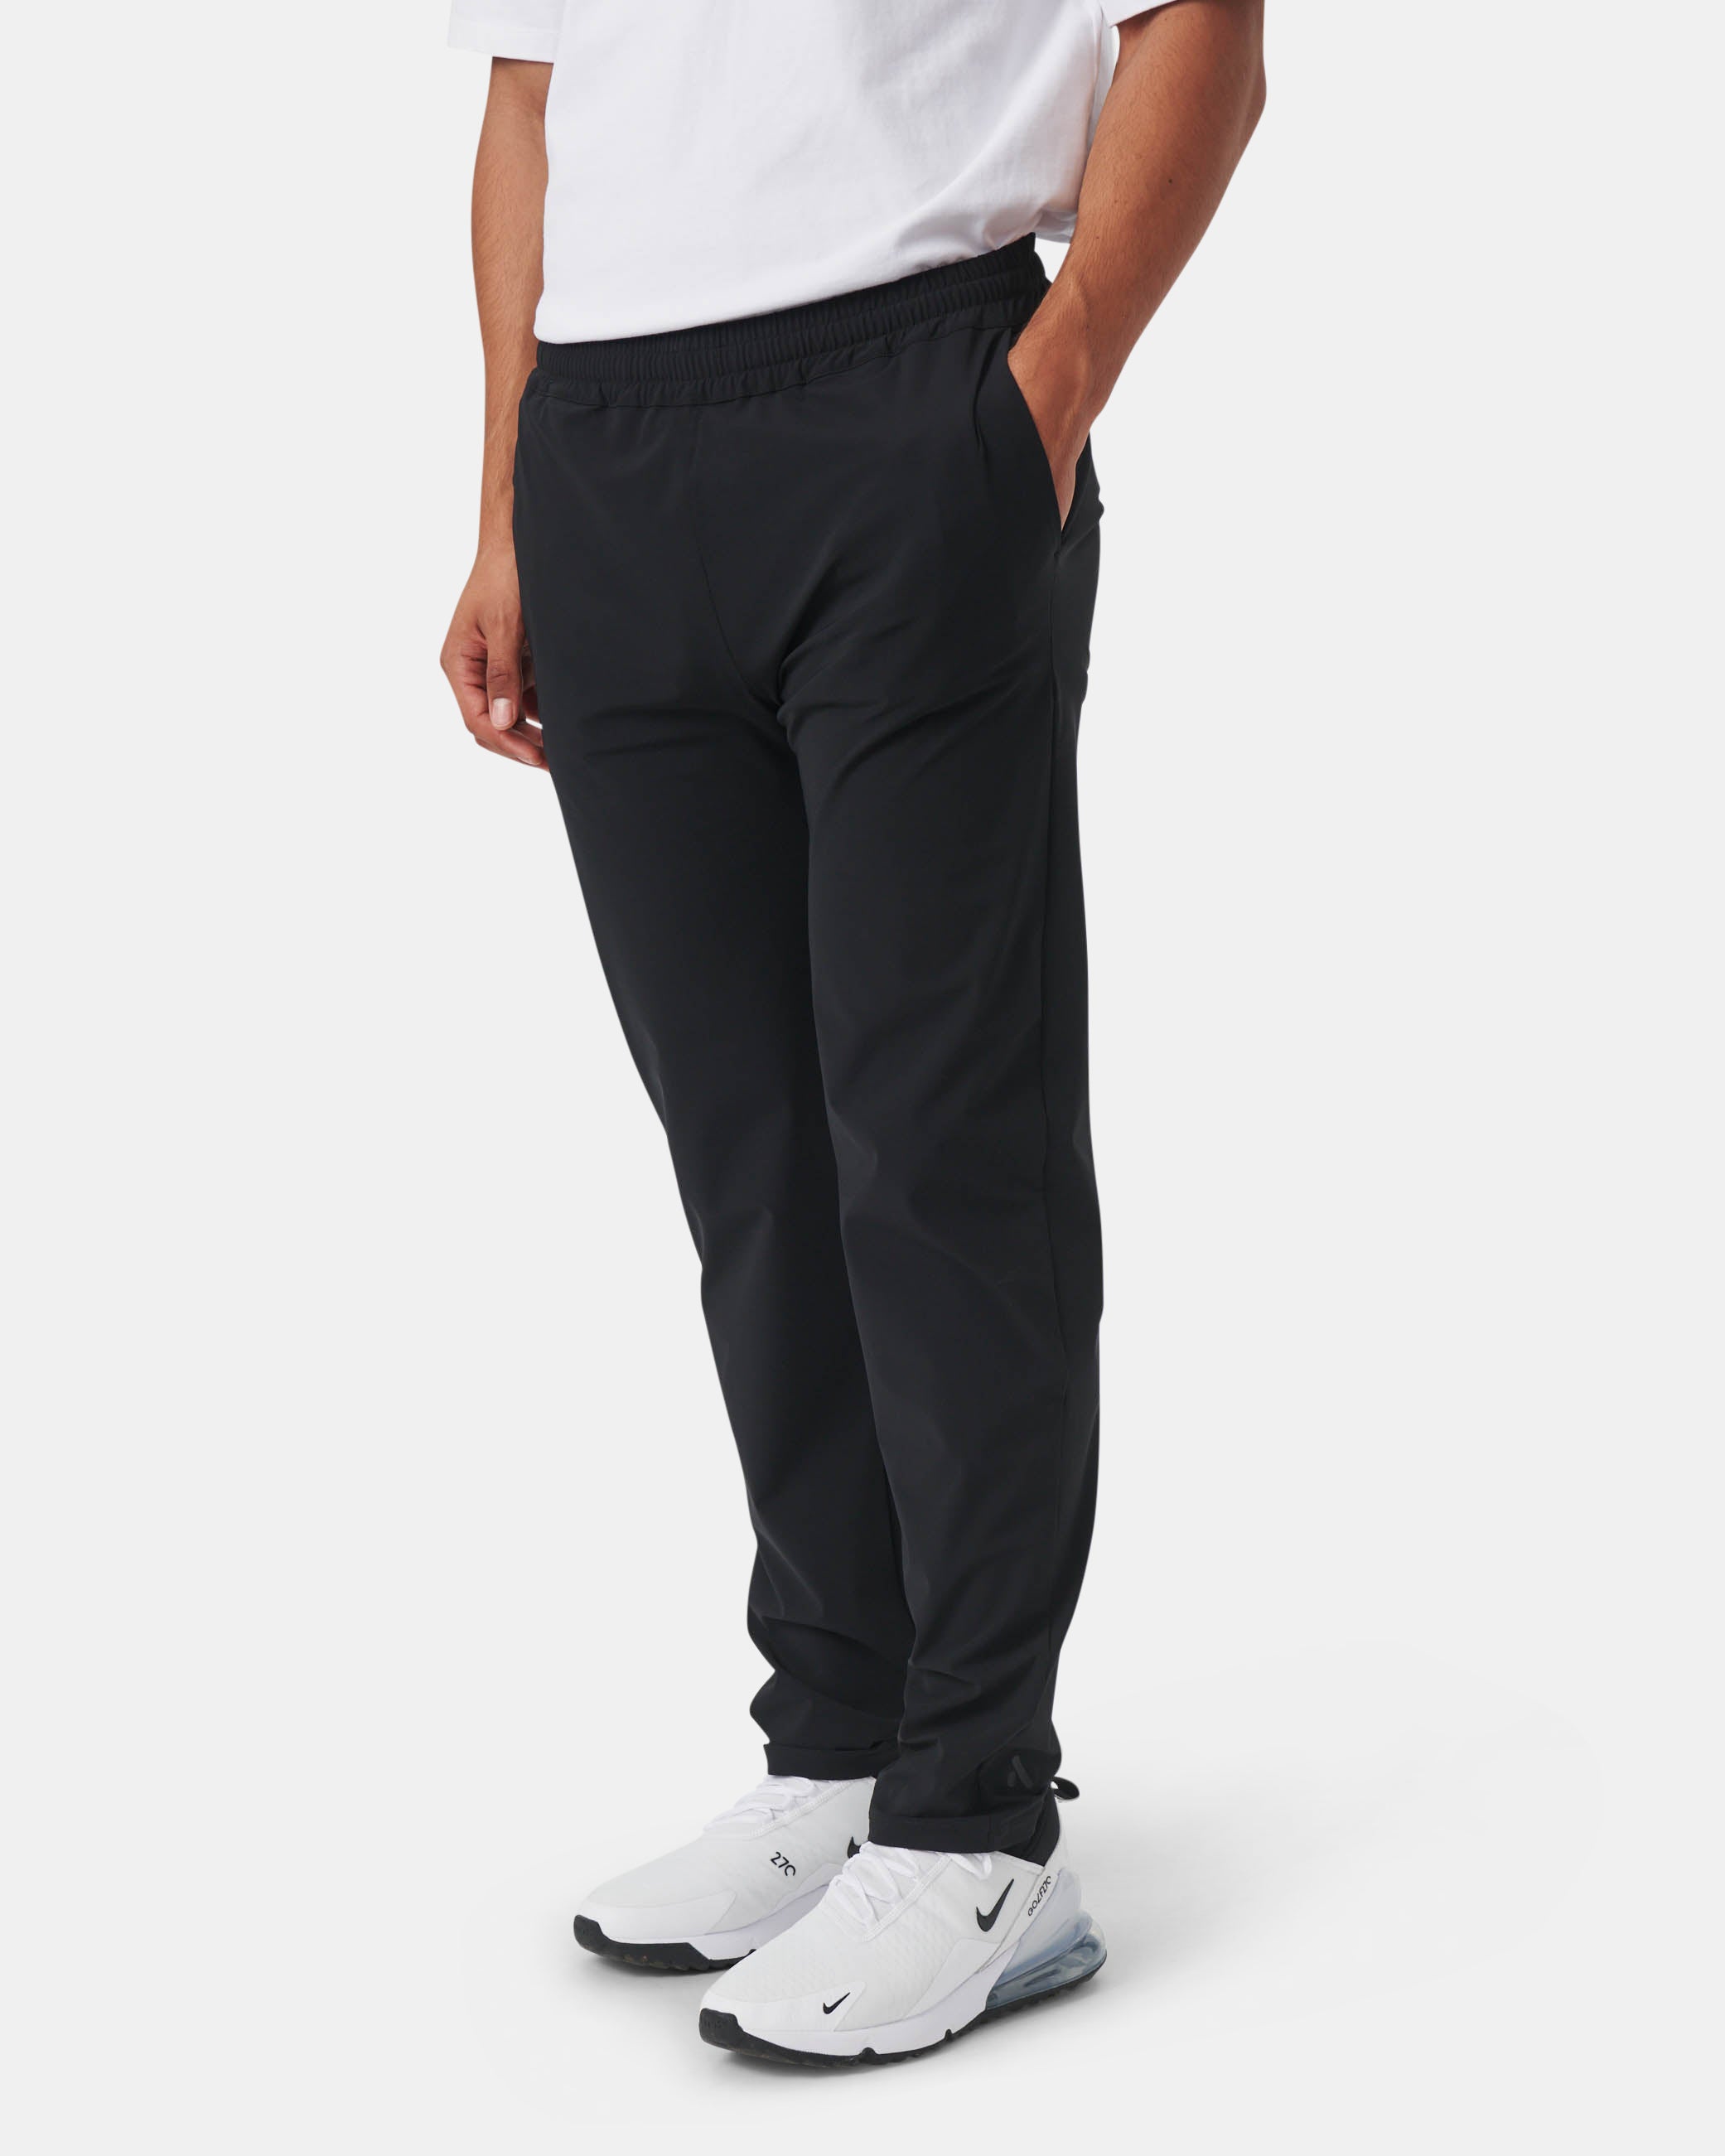 Cannac Sports Wear Mens Black Karara Track Pant, Size: Medium at